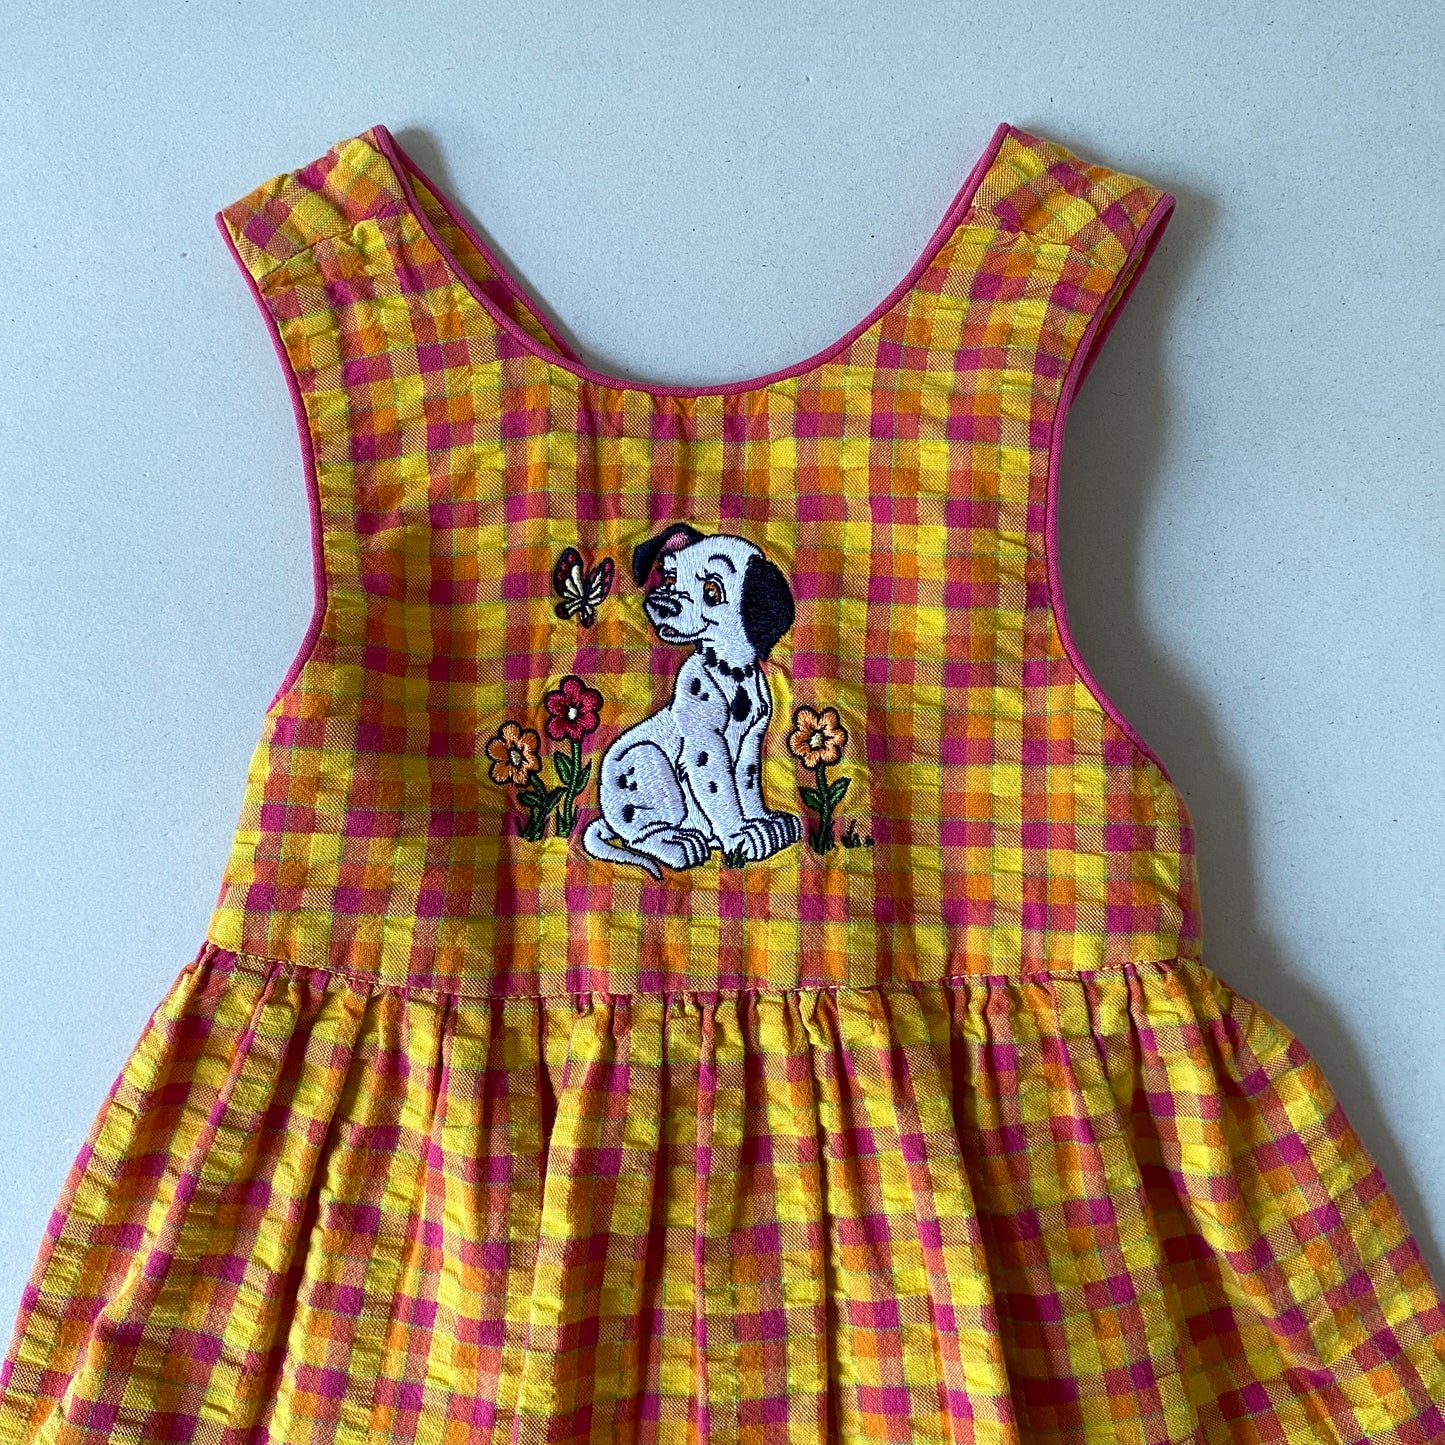 Vintage Disney 101 Dalmatians Orange Yellow Plaid Dress (6M)